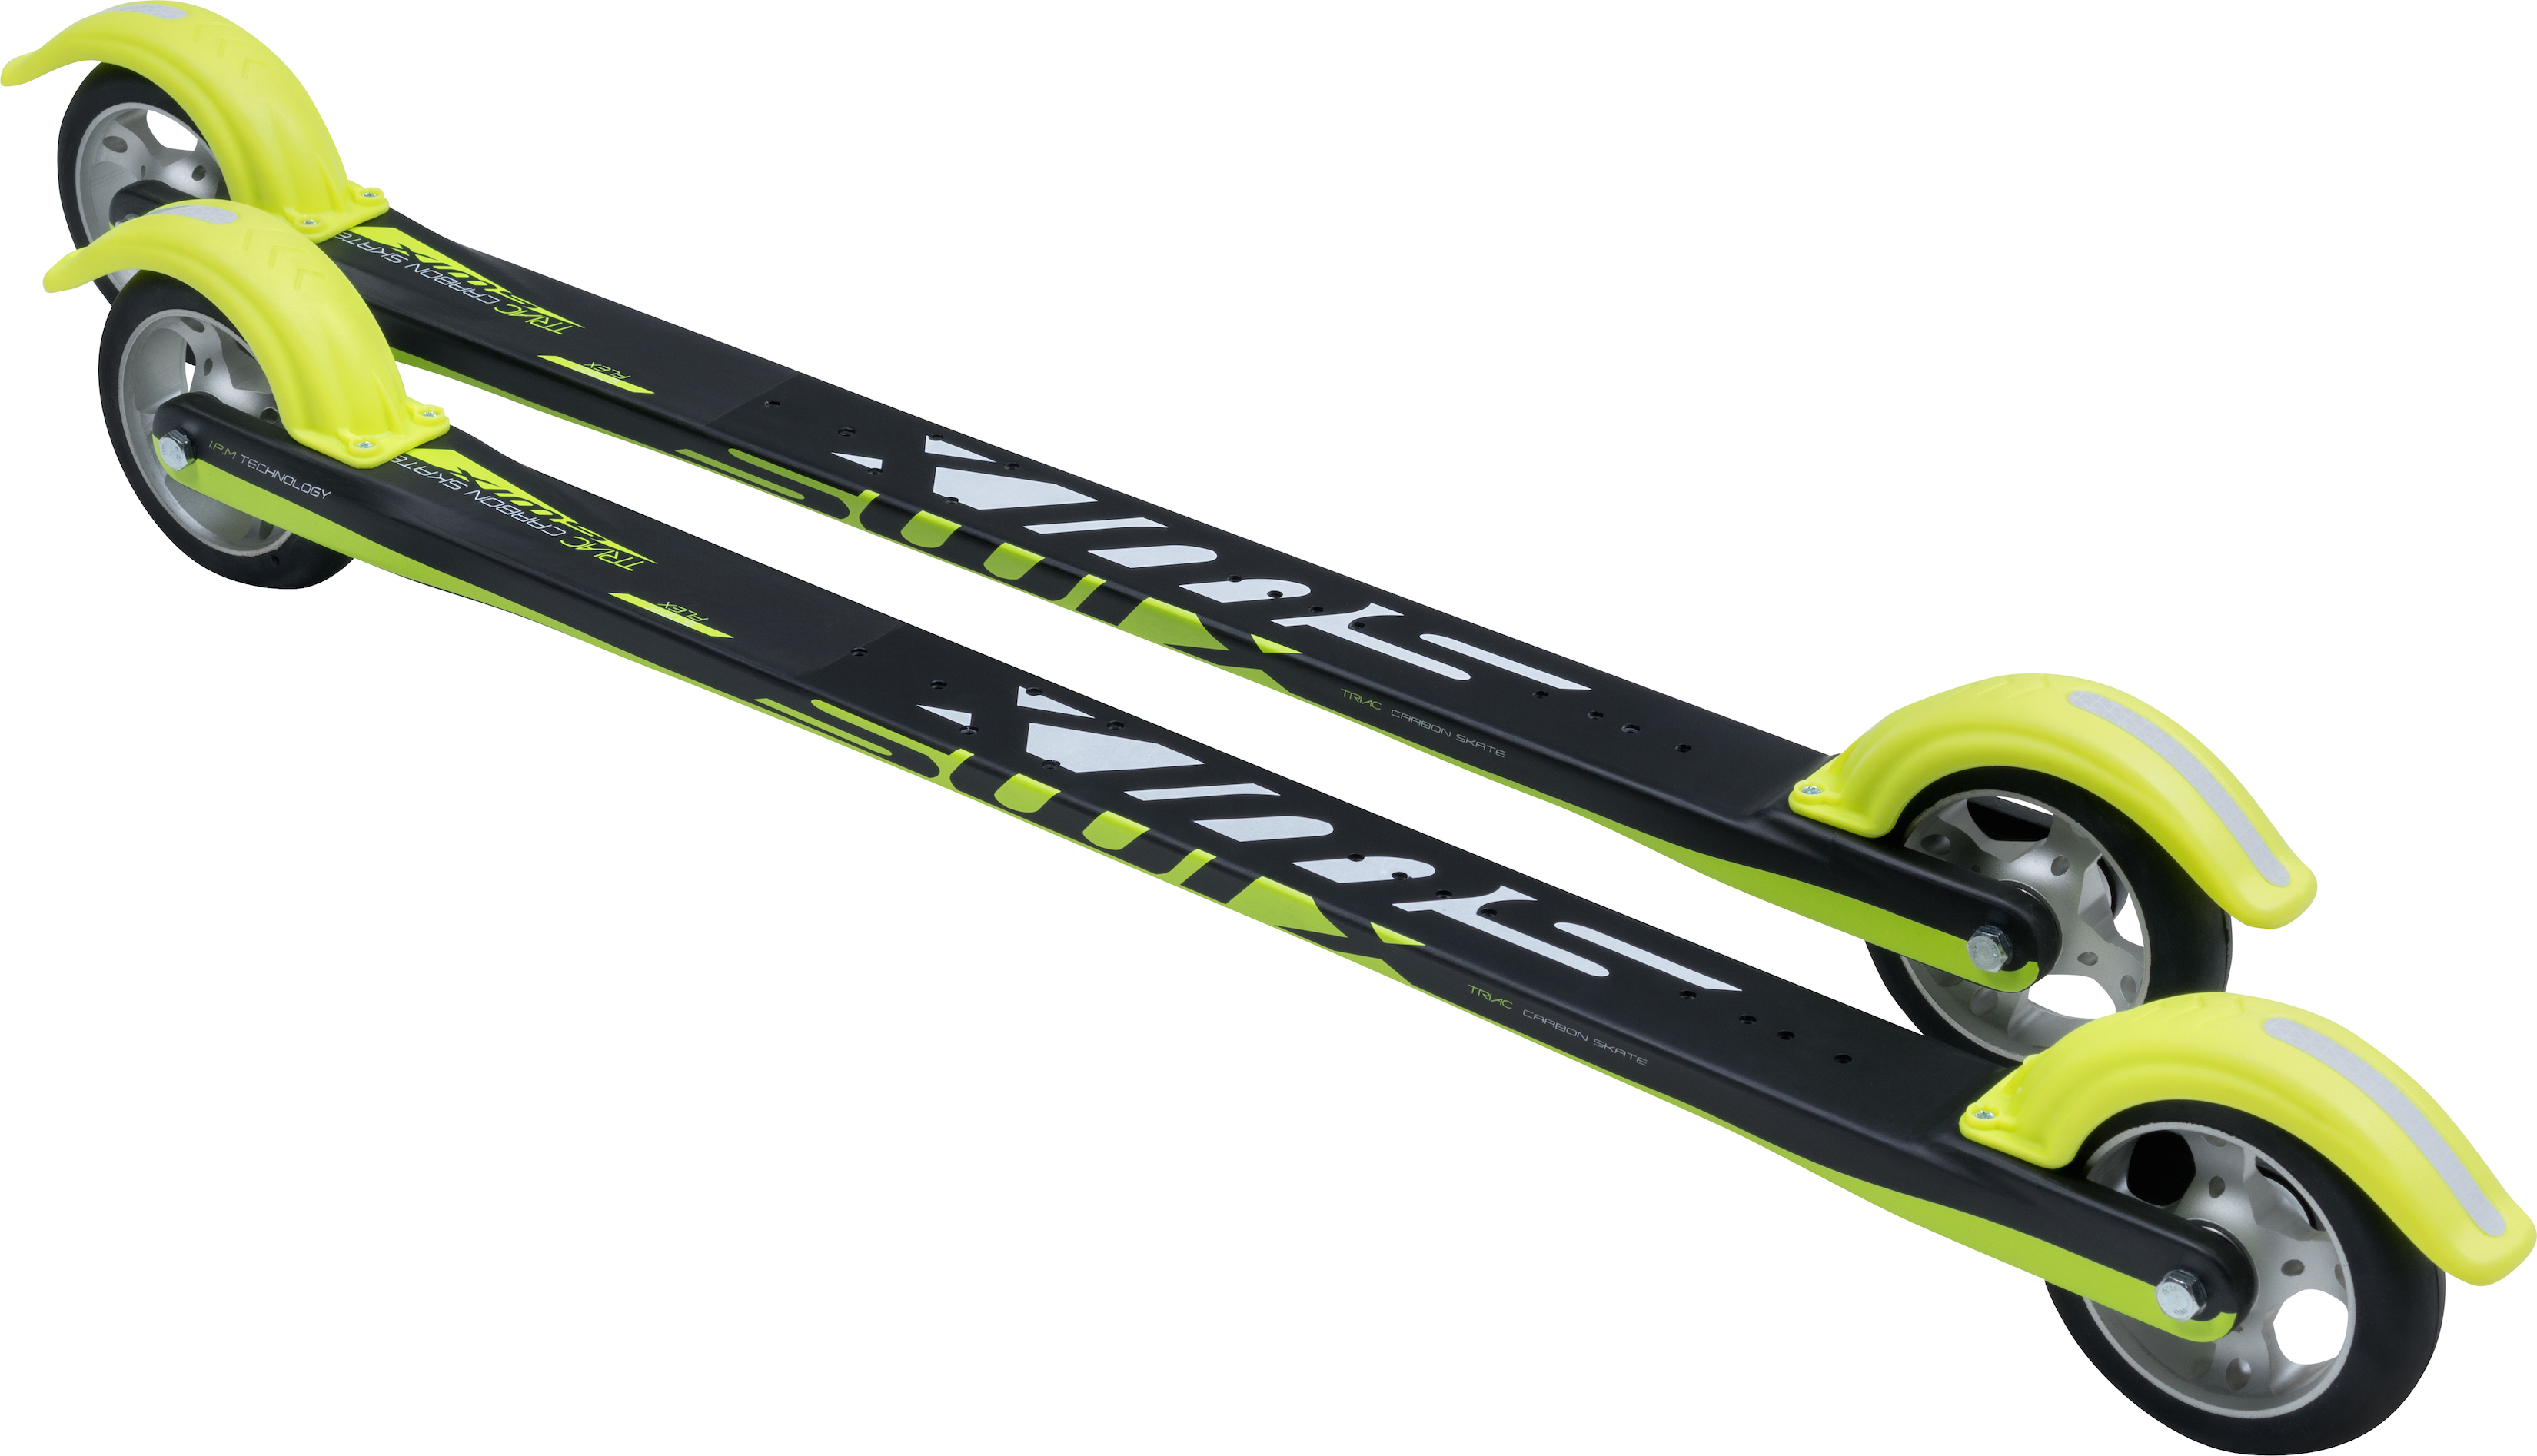 salomon roller skis